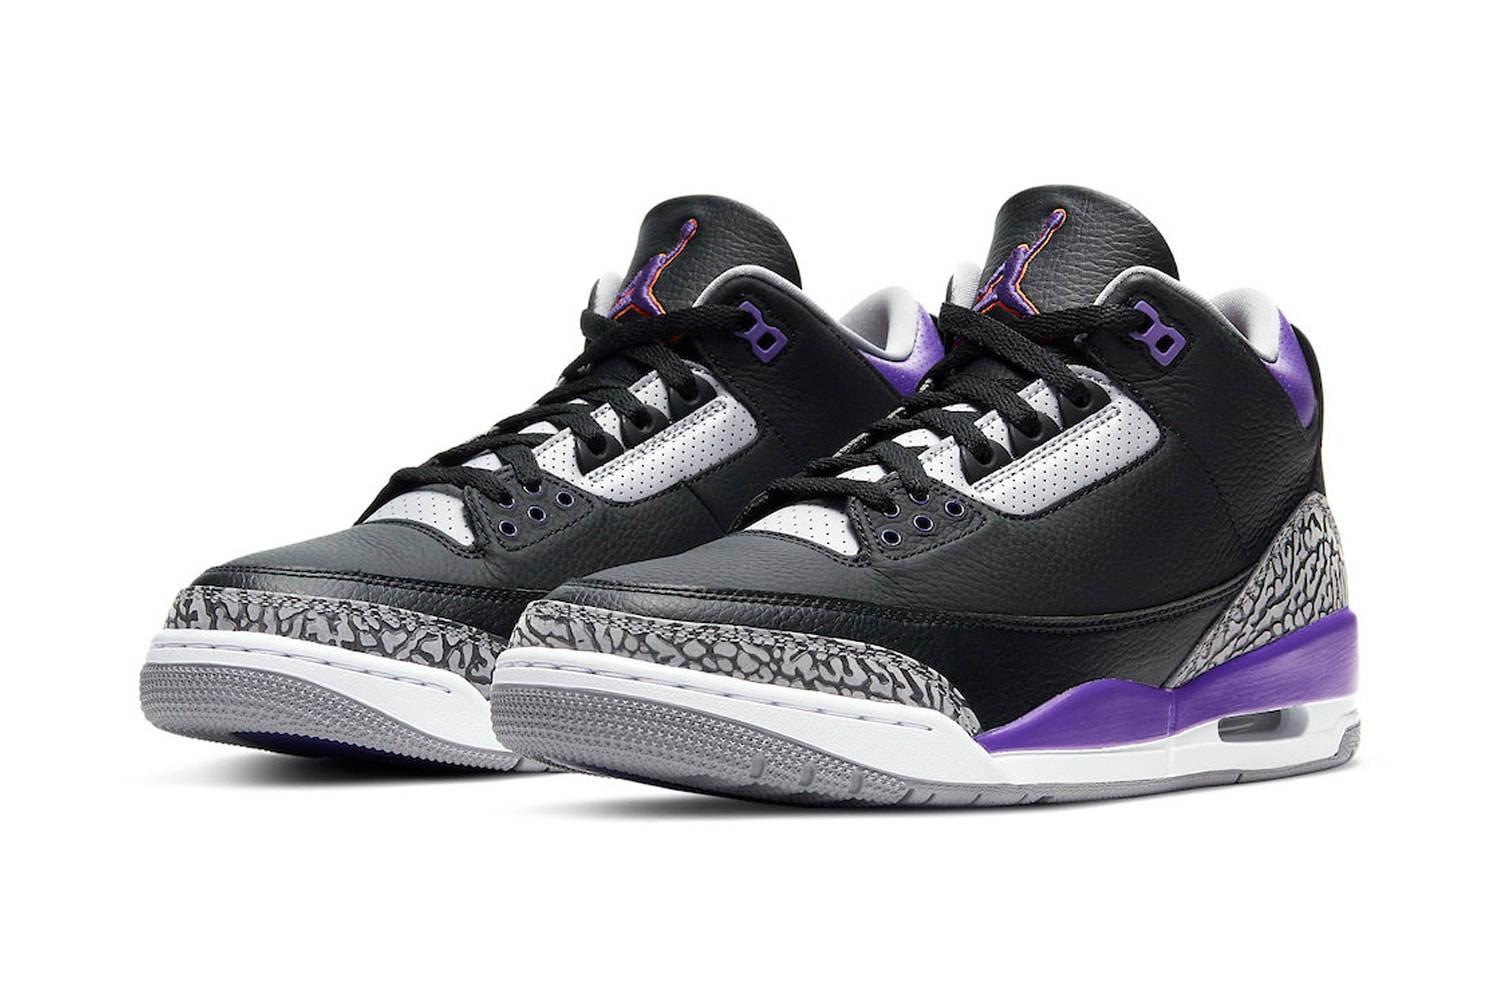 Air Jordan 3 Court Purple Release ct8532-050 Info Date buy Price Brand Black Cement Grey White Court Purple Phoenix Suns